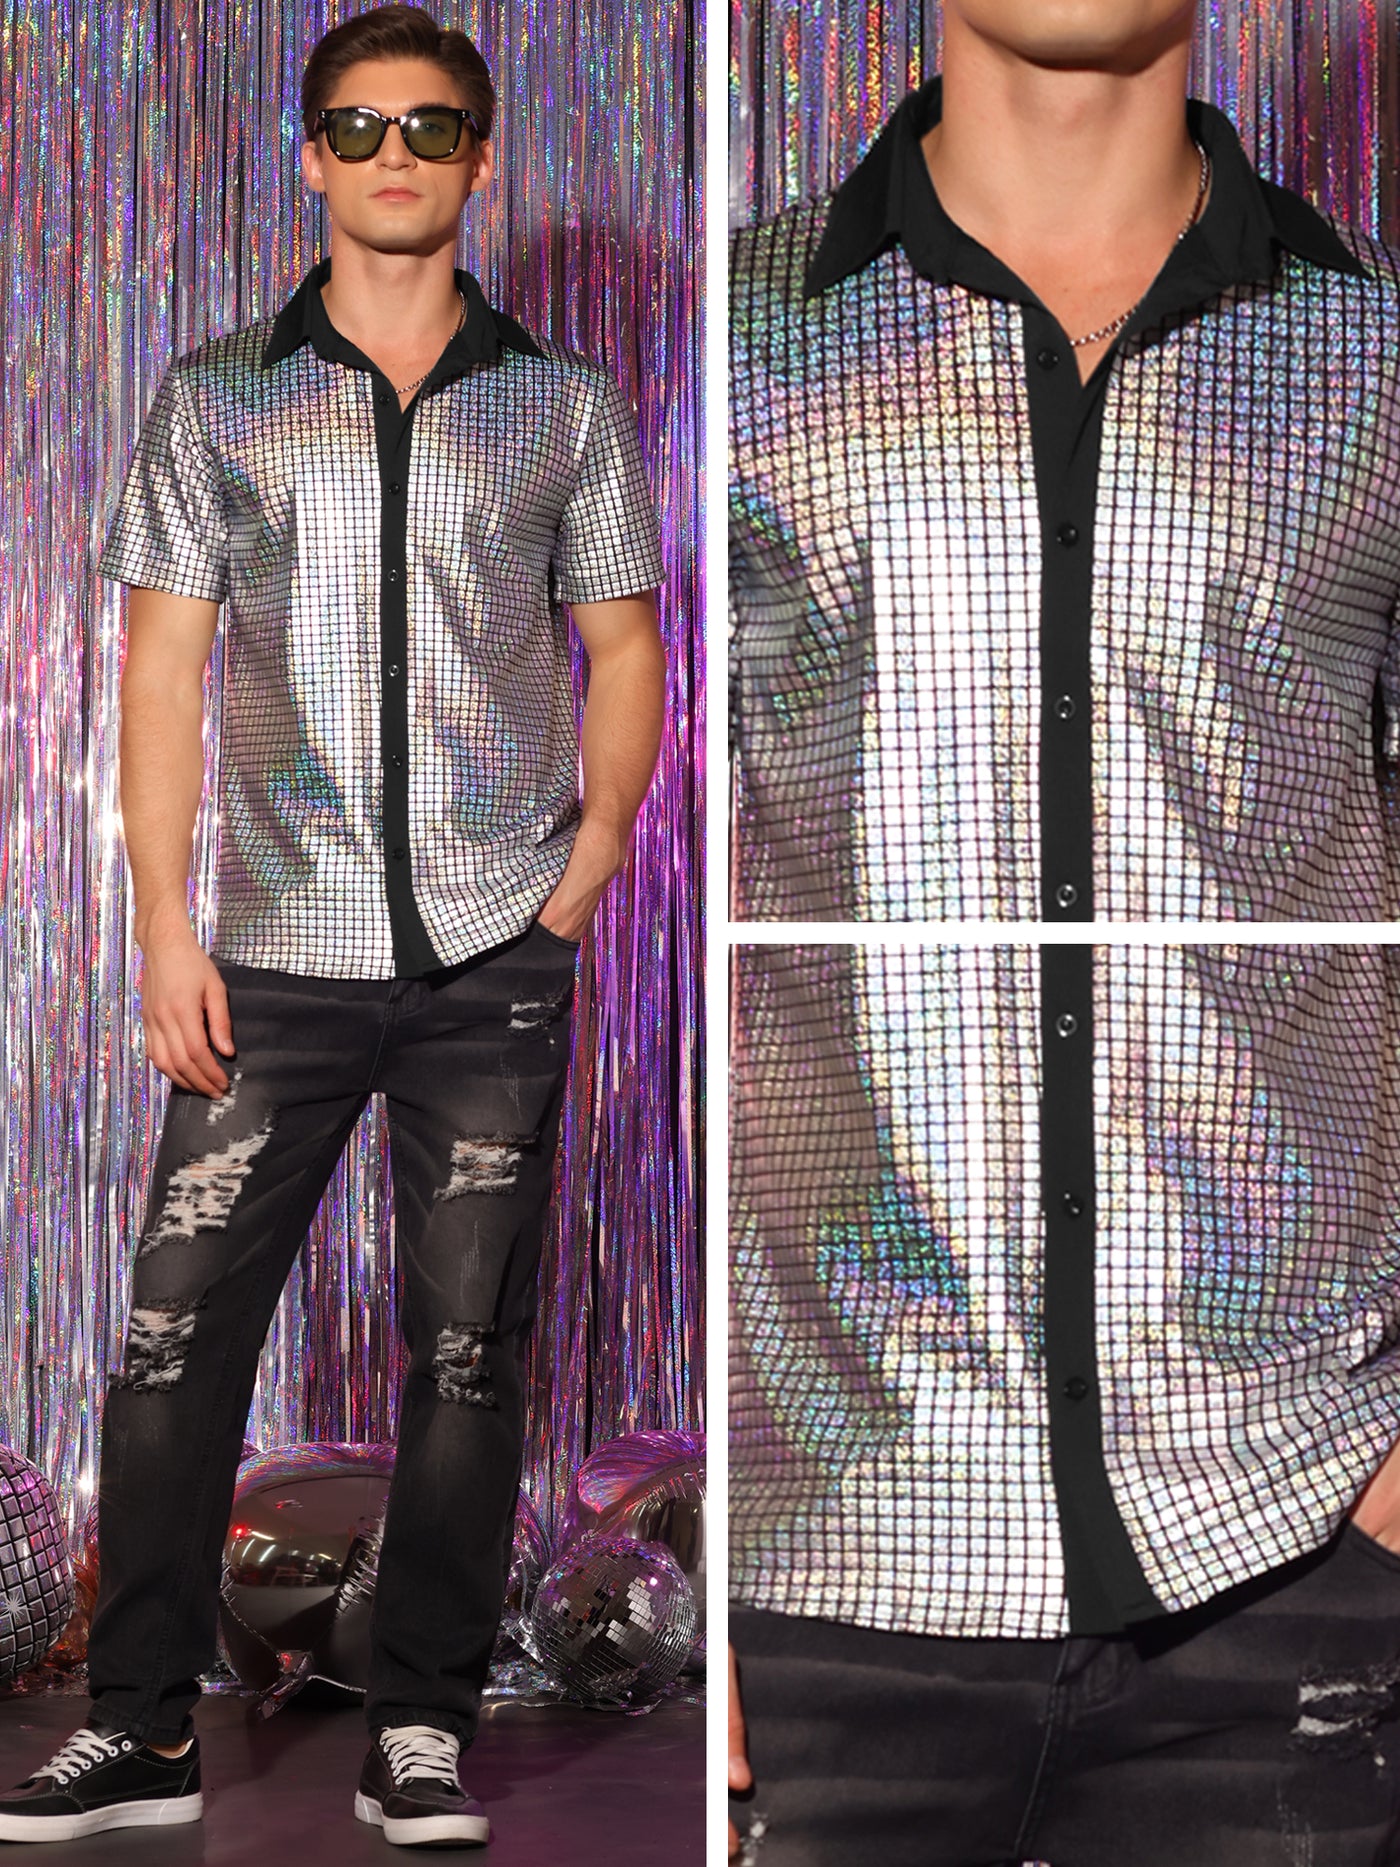 Bublédon Shiny Metallic Short Sleeves Button Down Party Disco Shirts